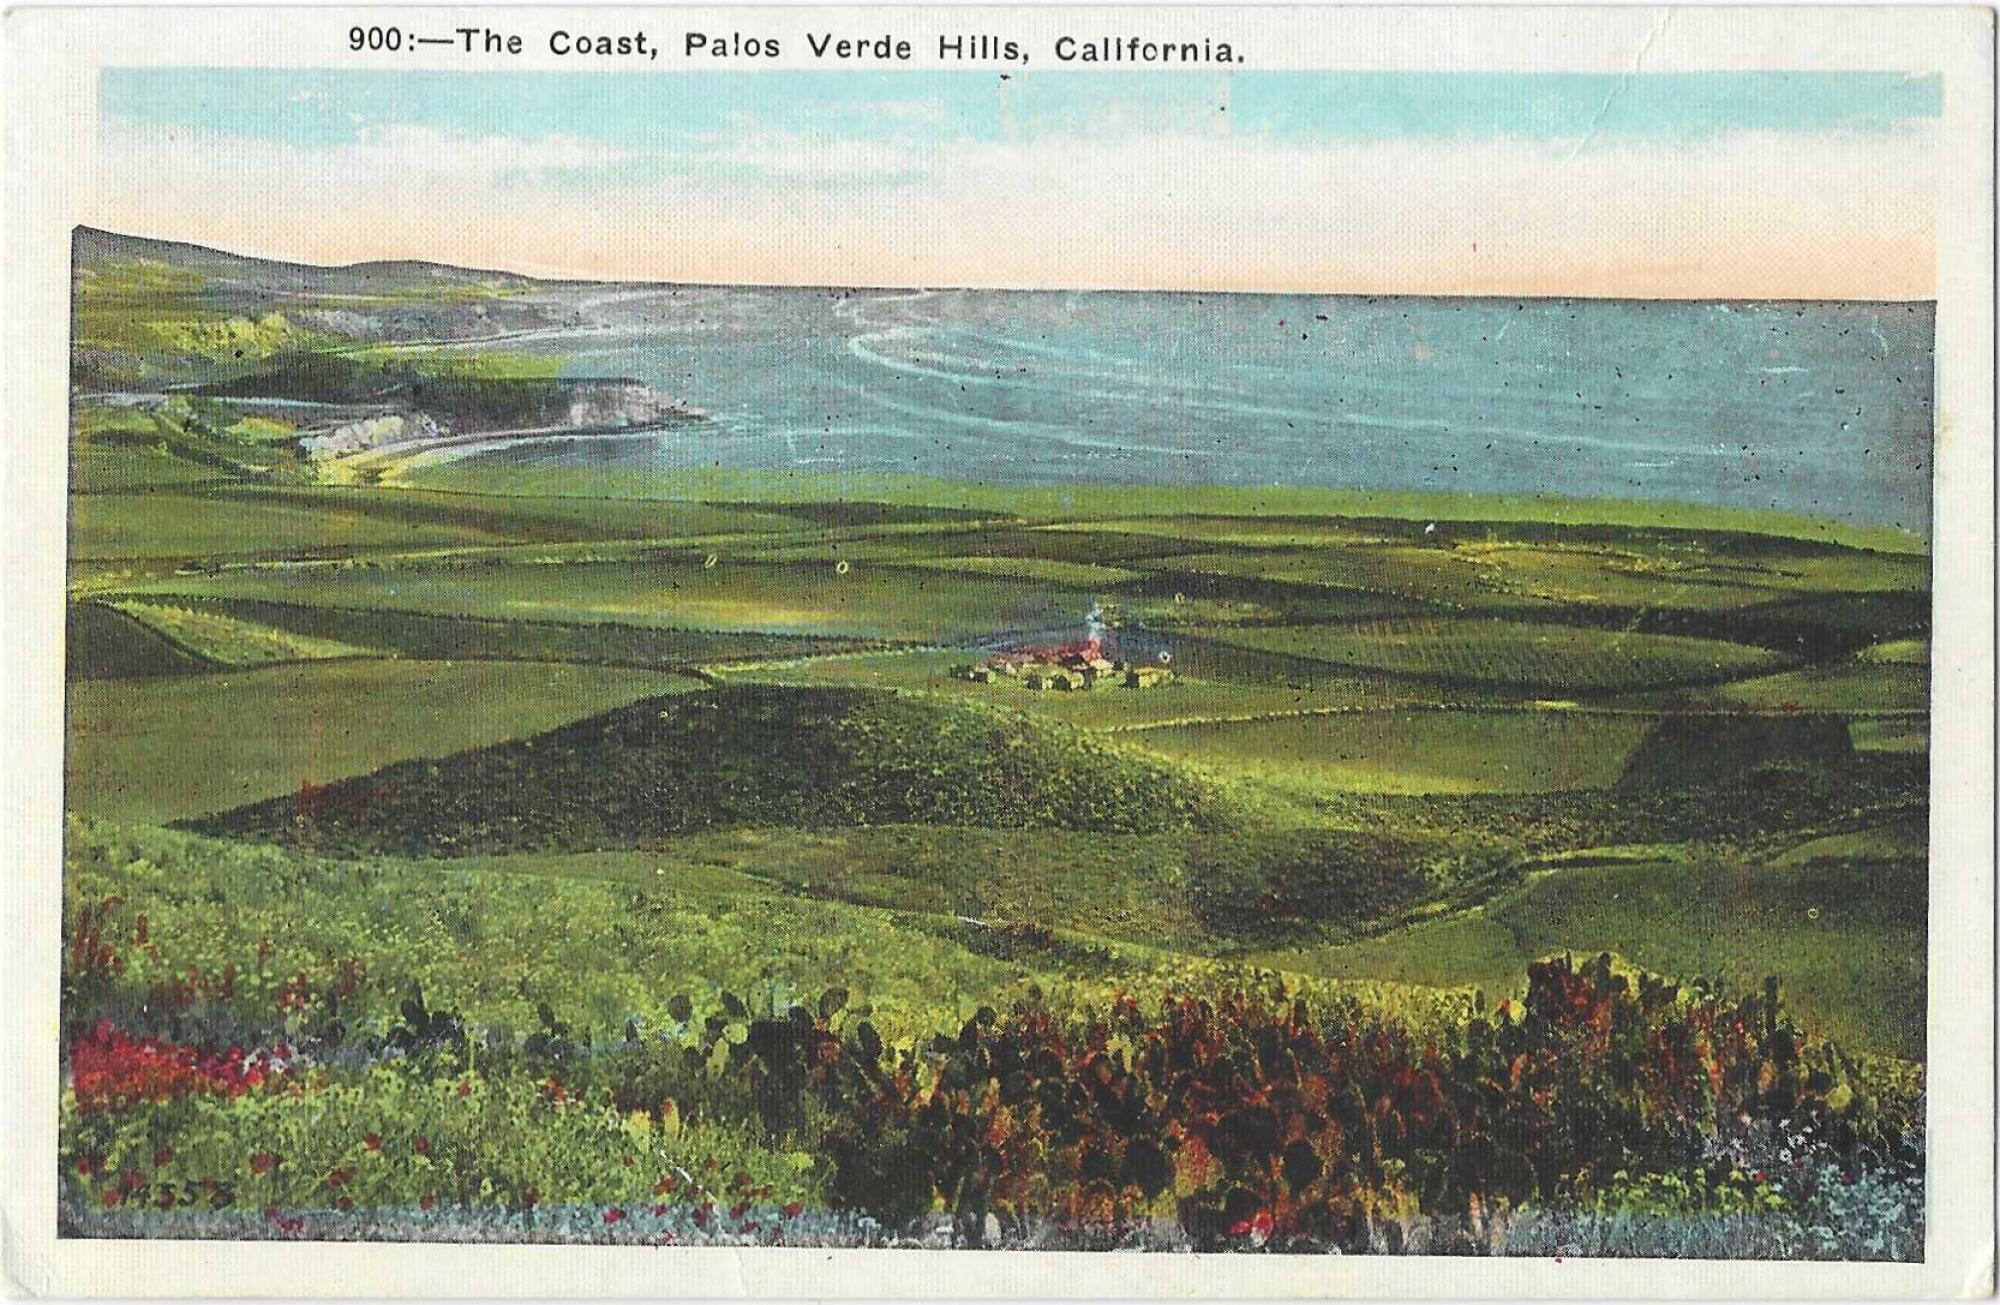  "The Coast, Palos Verde [sic] Hills, California"